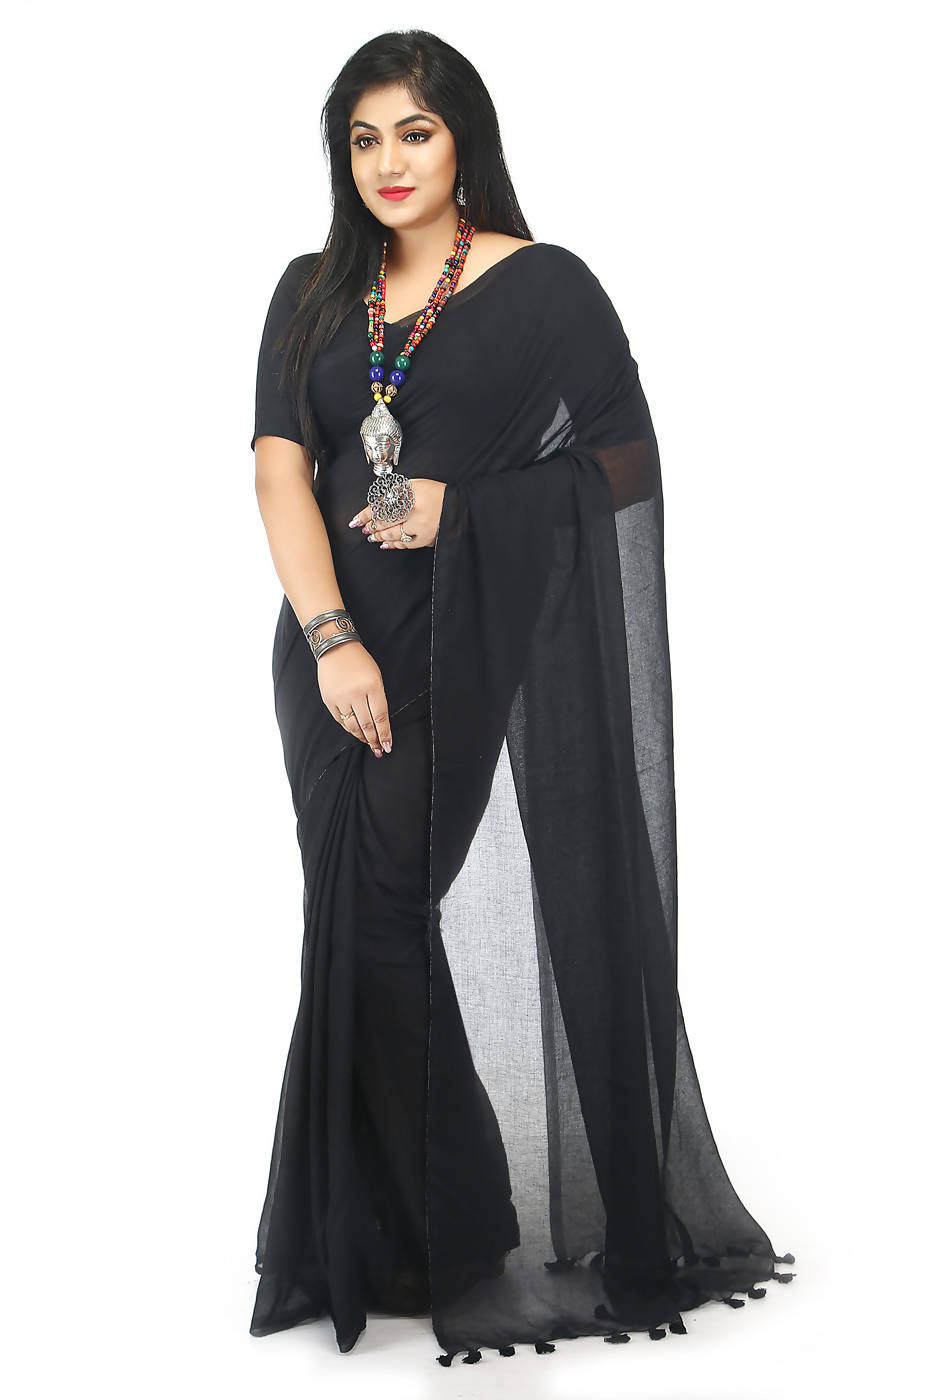 Handloom bengal black soft cotton saree